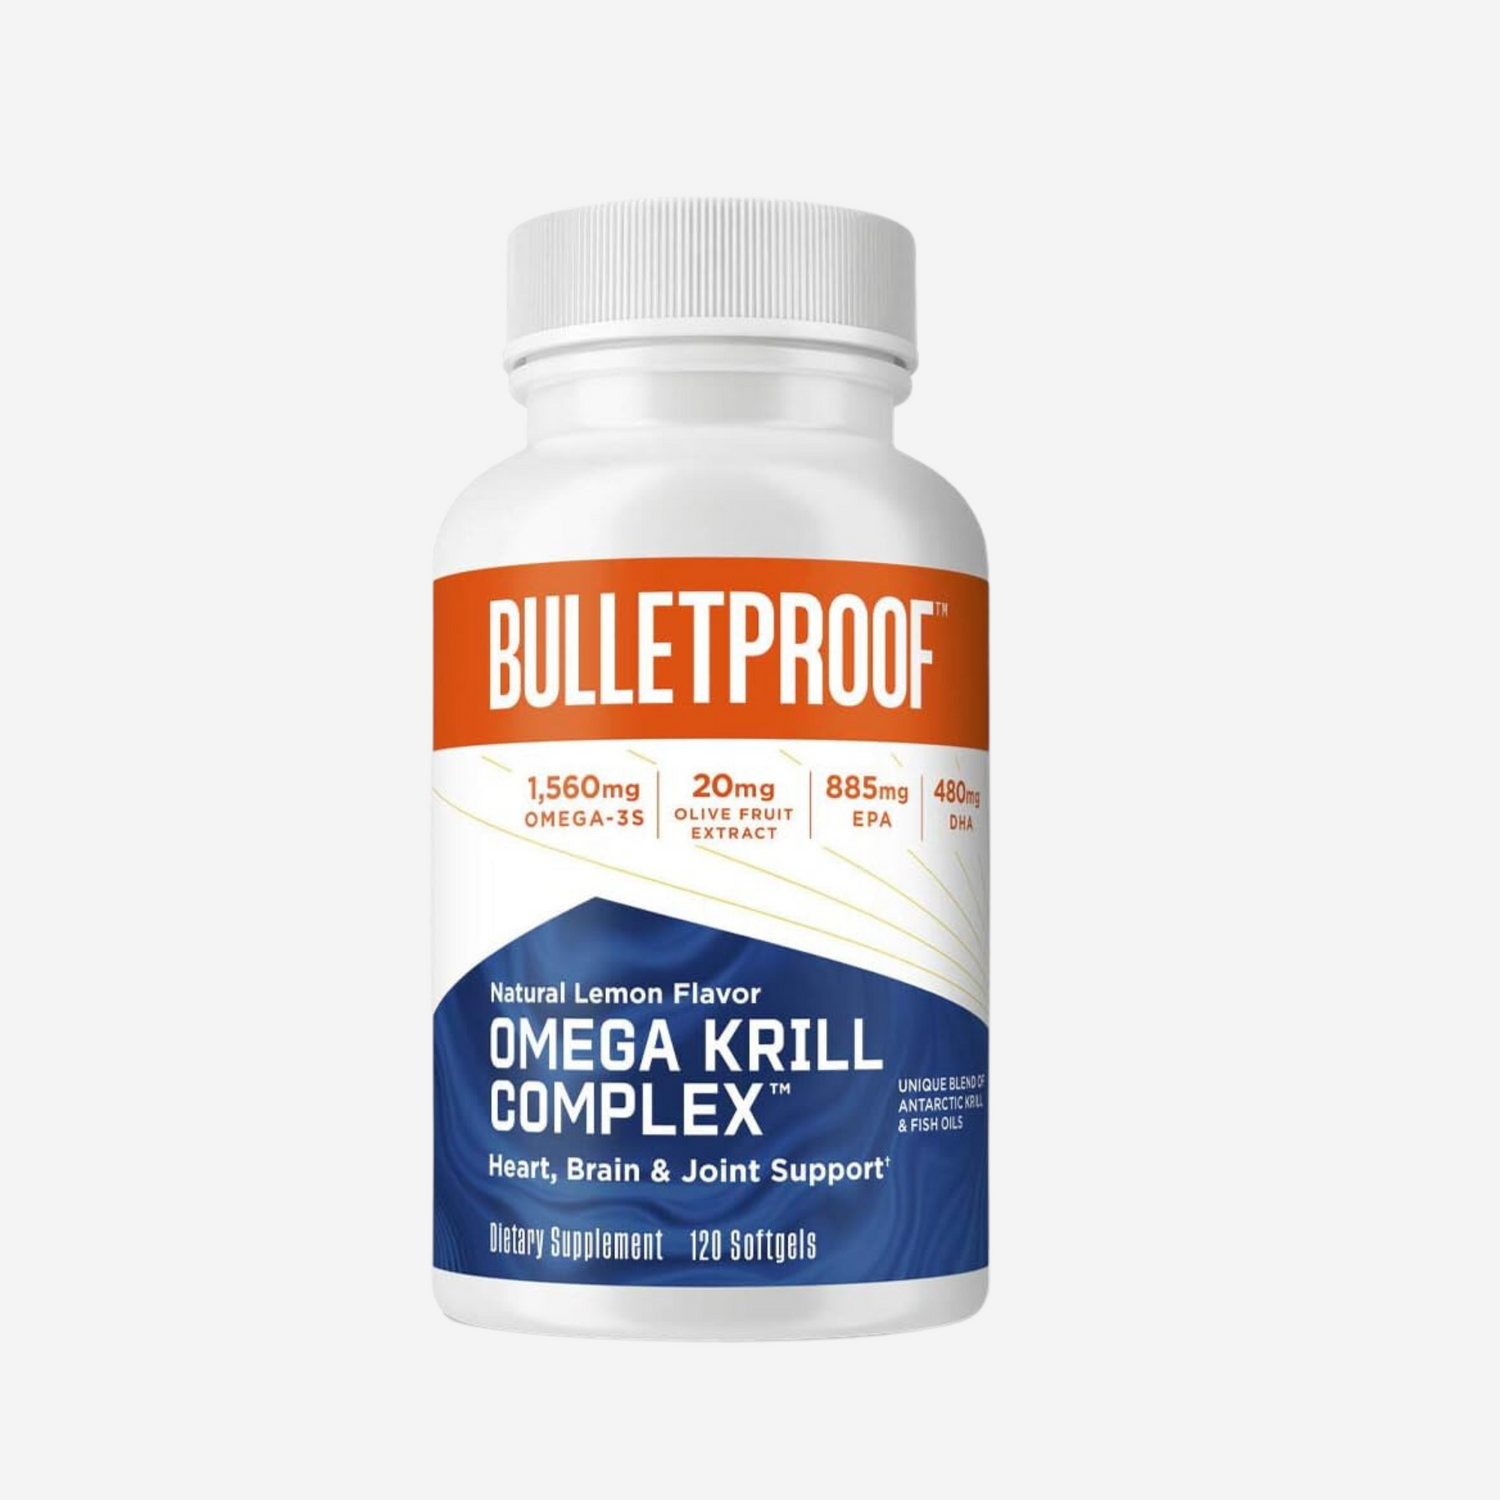 Bulletproof Omega Krill Complex, Lemon Flavor, 120 Softgels, 1560mg Omega-3 with EPA